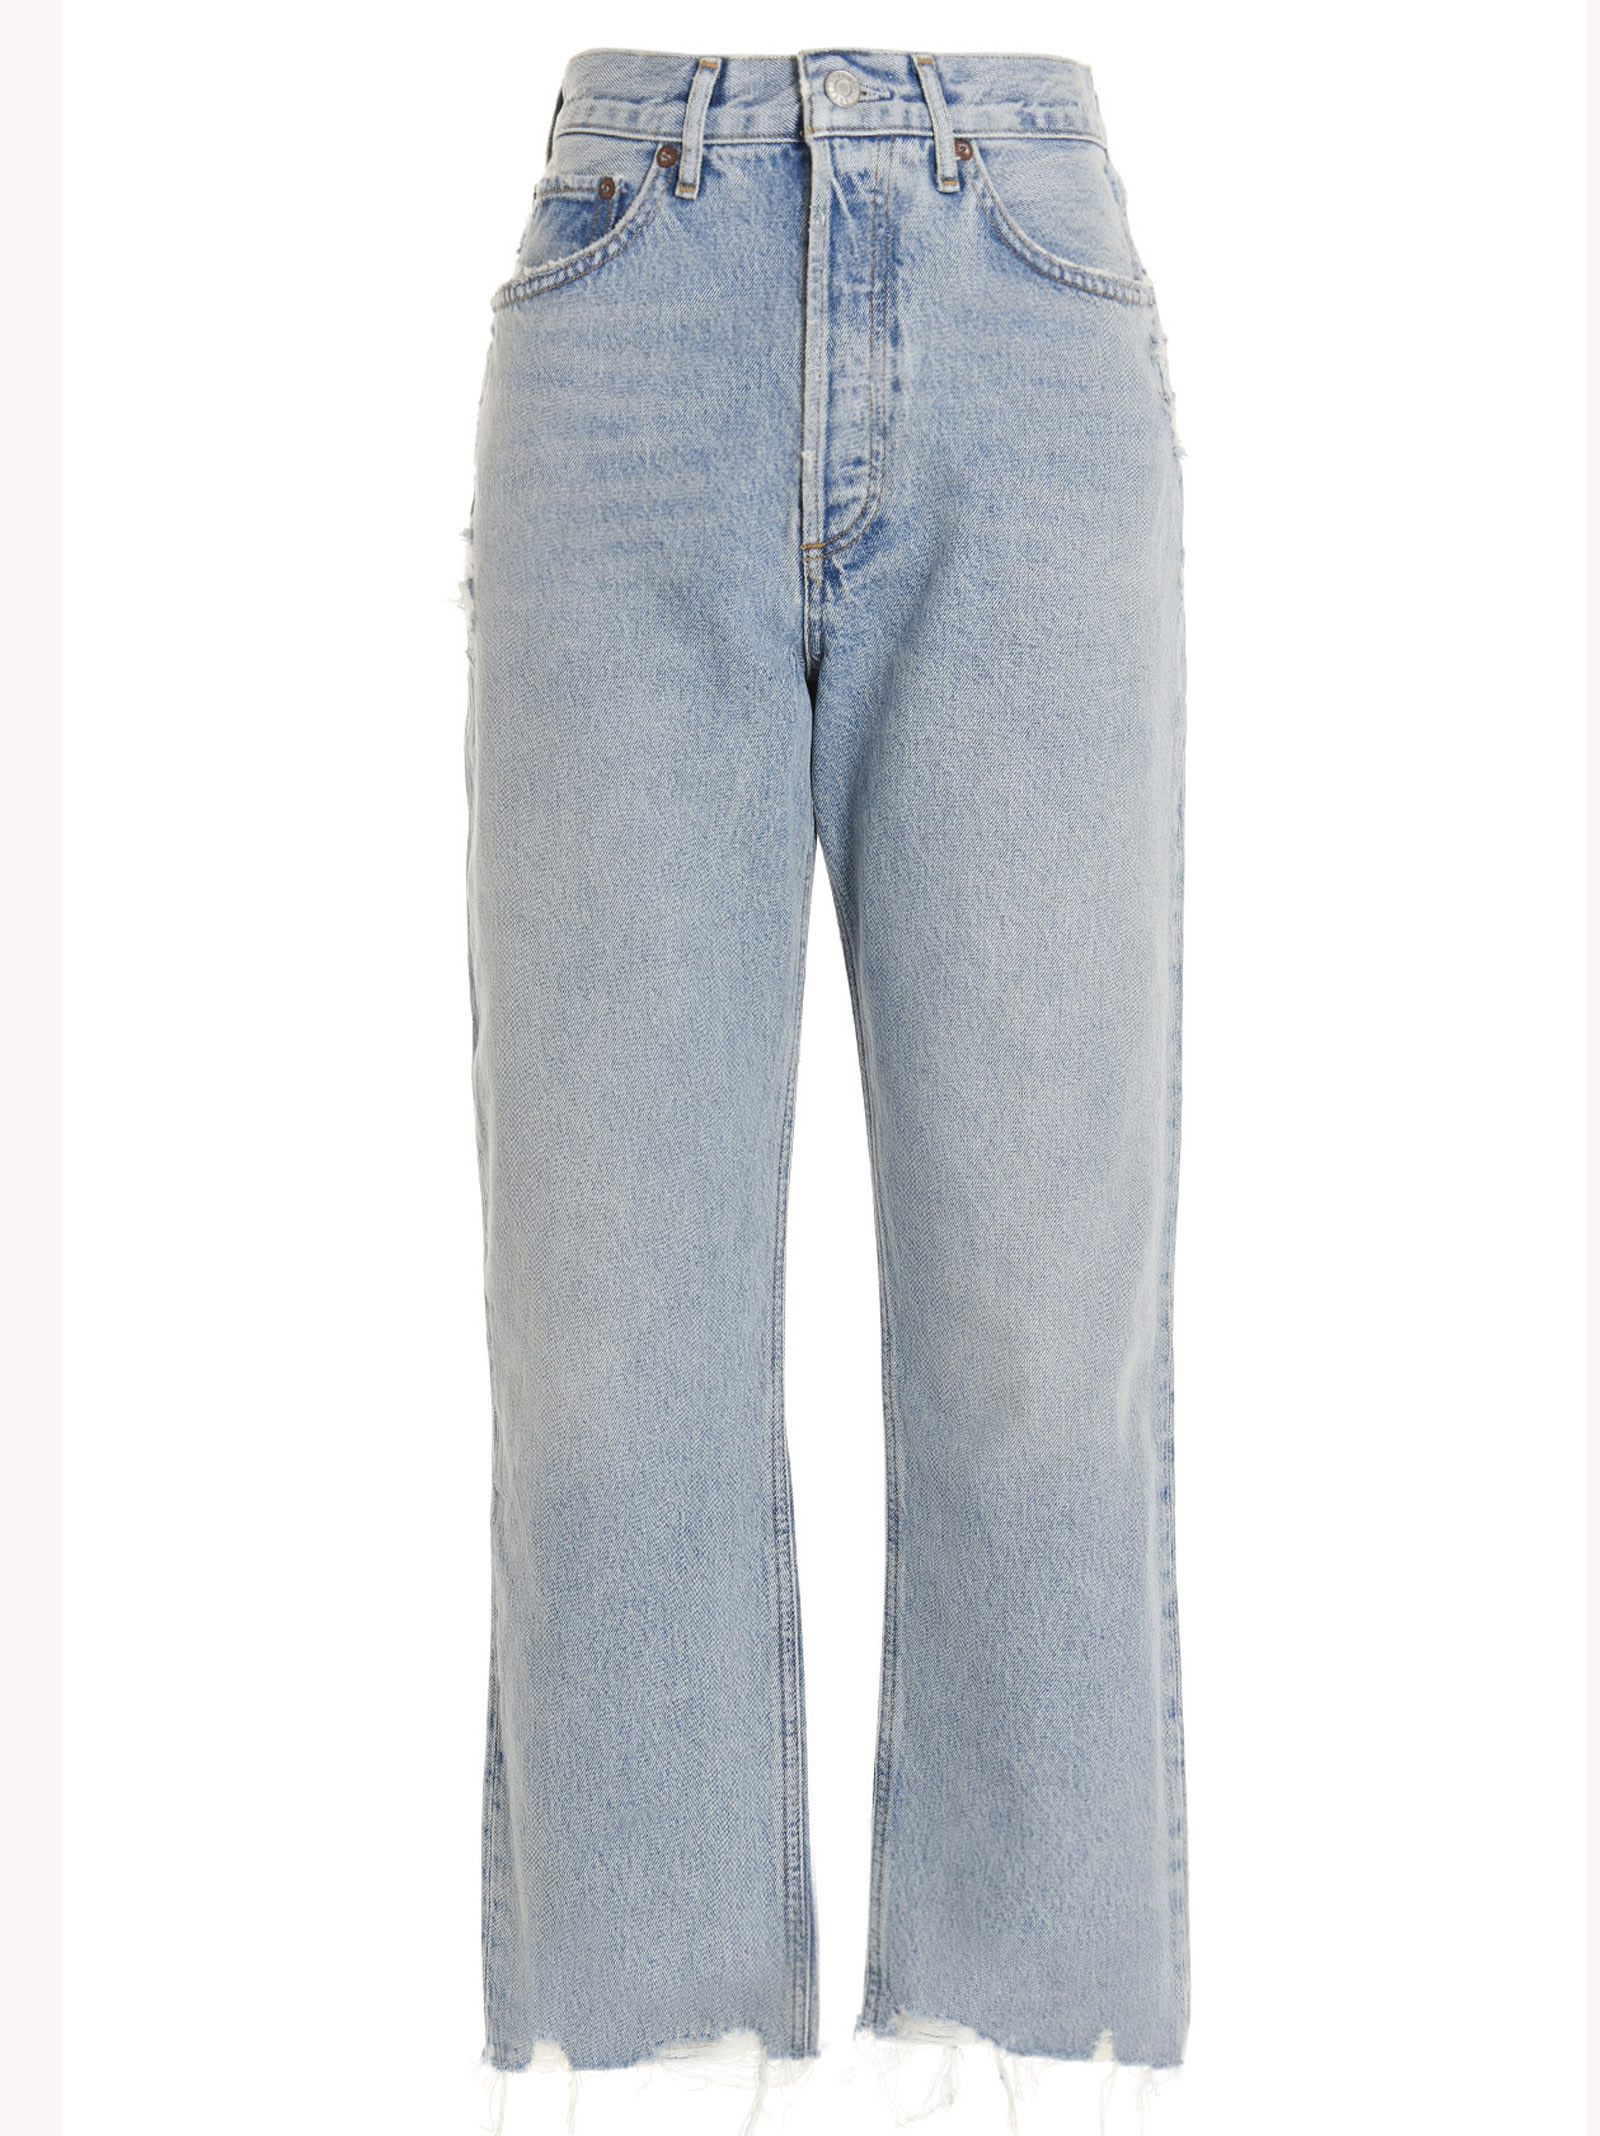 AGOLDE 90s Crop Jeans